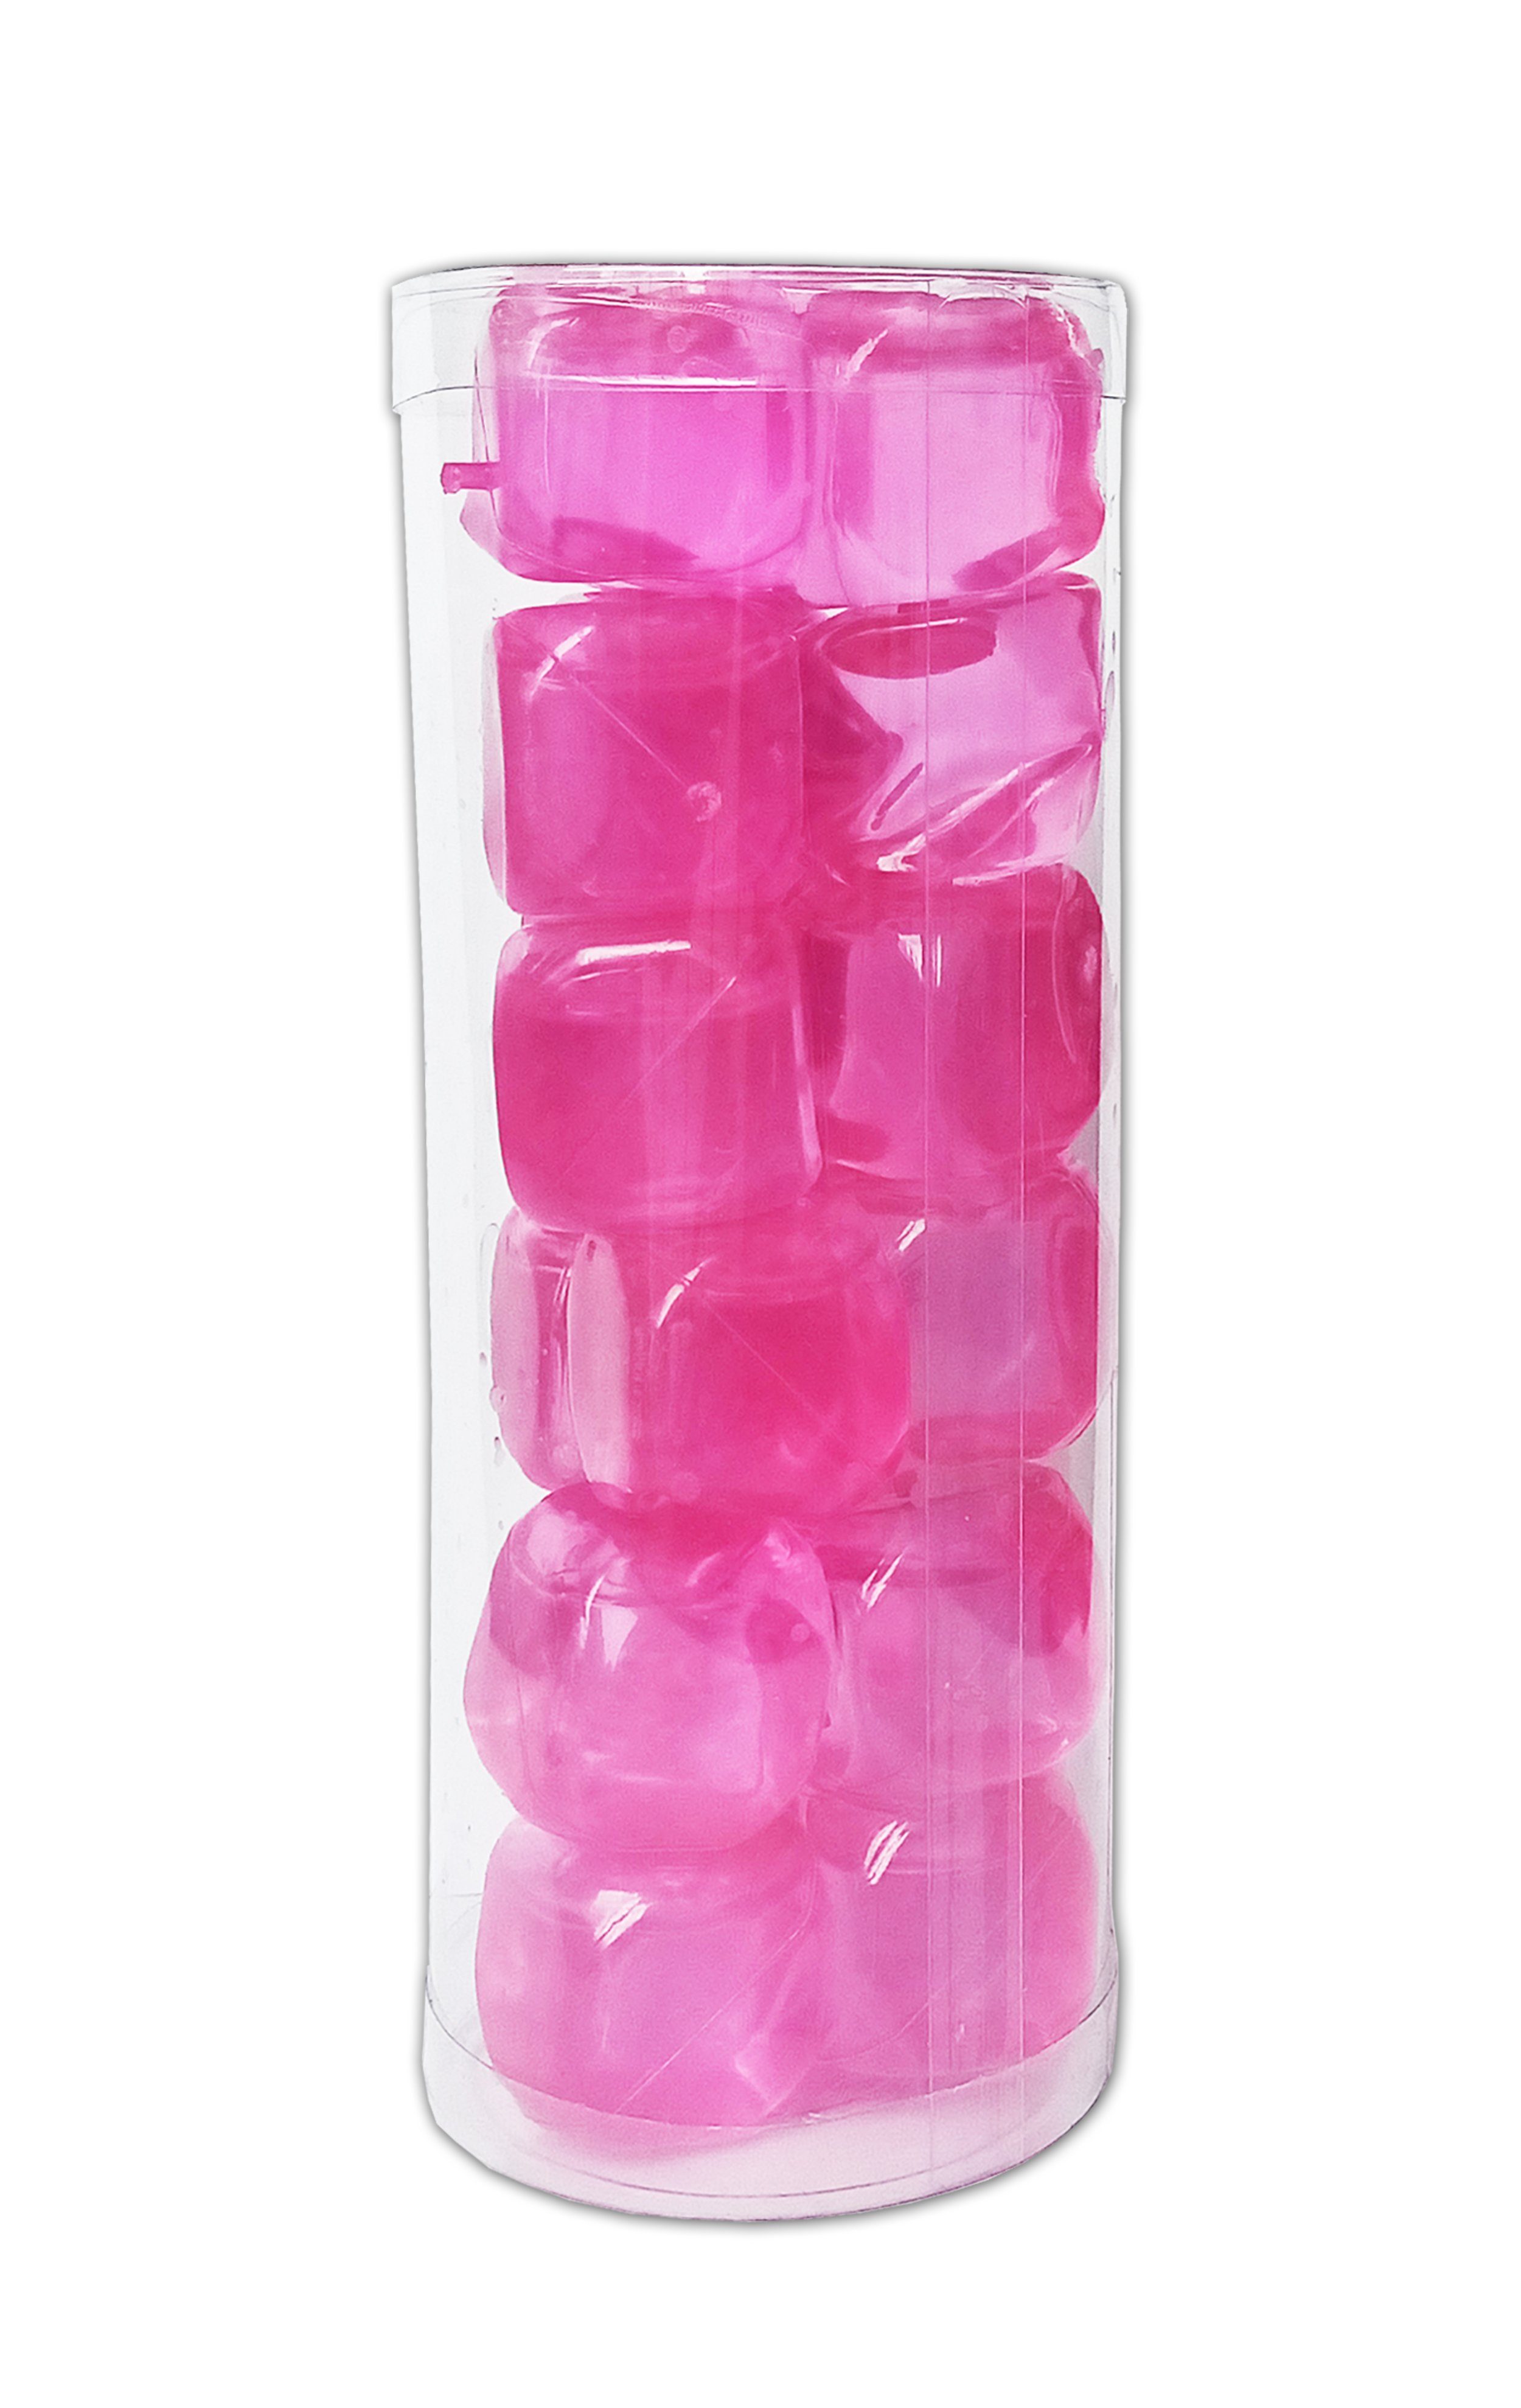 Kühlwürfel 18x EIS wiederverwendbar Kühlsteine Whisky Bier EISWÜRFEL Eiswürfel-Steine 67 Steine Kunststoff Cube (Pink), Weinkühler Würfel